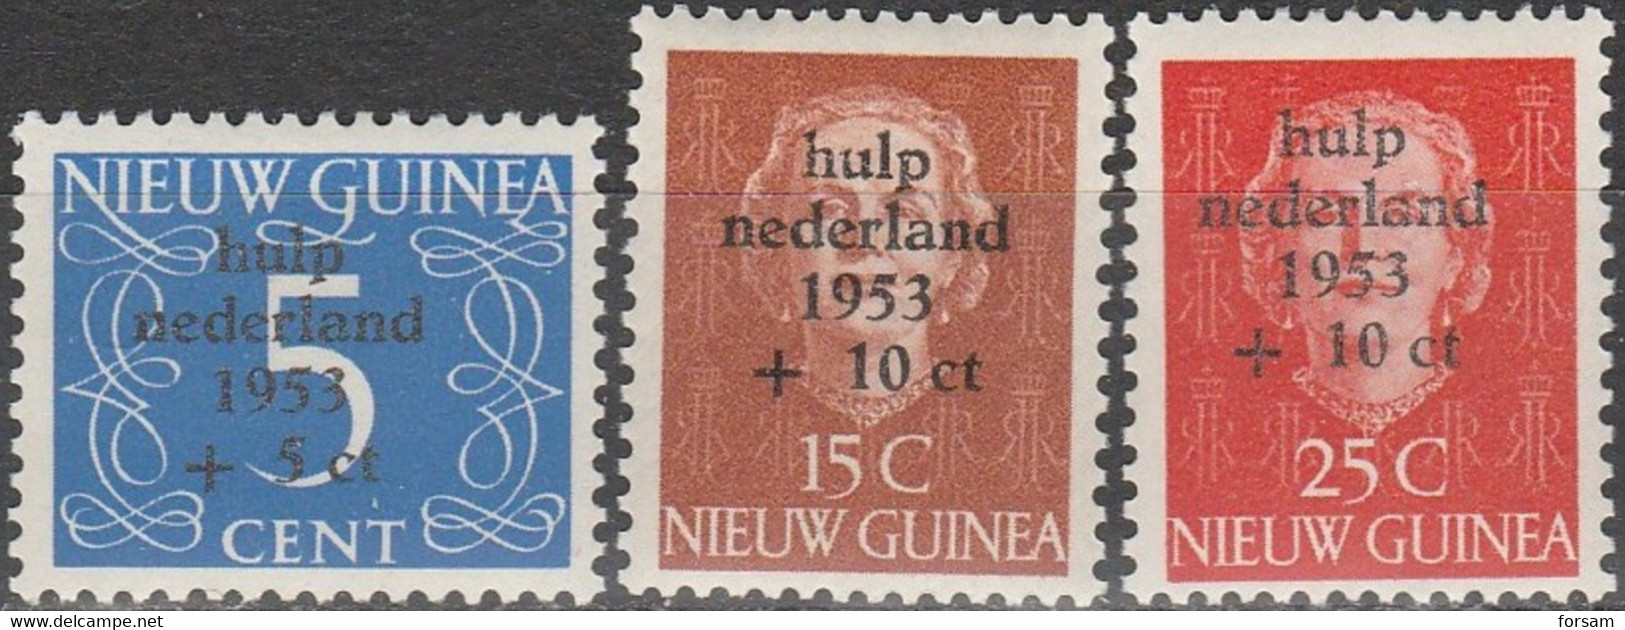 NETHERLANDS NEW GUINEA..1953..Michel # 22-24...MLH...MiCV - 45 Euro. - Netherlands New Guinea